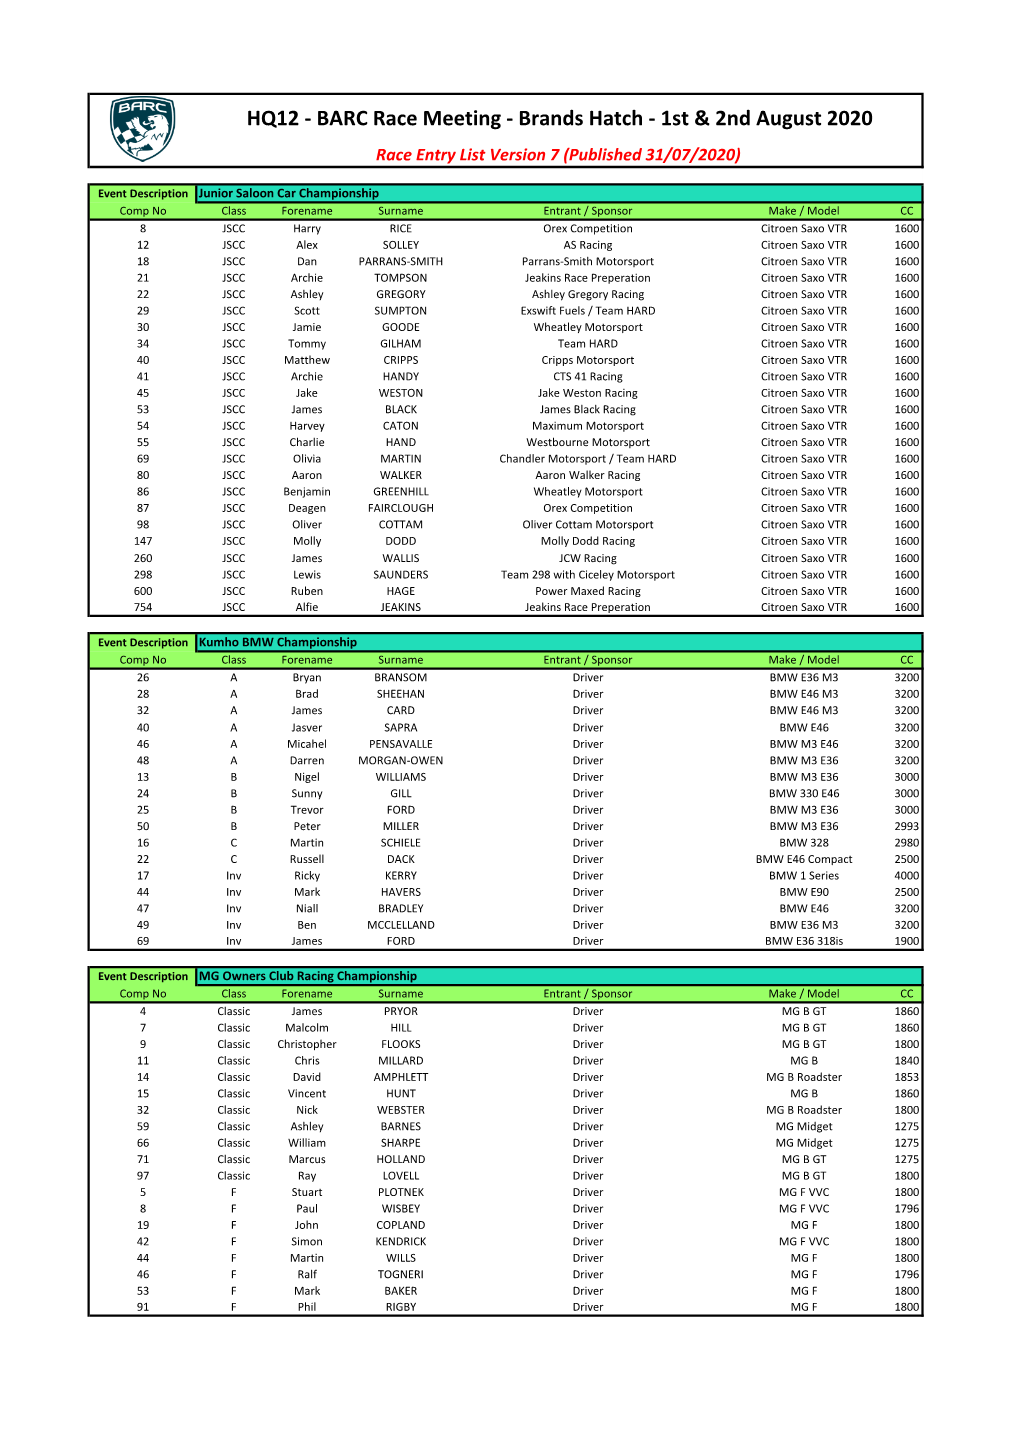 HQ12 - BARC Race Meeting - Brands Hatch - 1St & 2Nd August 2020 Race Entry List Version 7 (Published 31/07/2020)